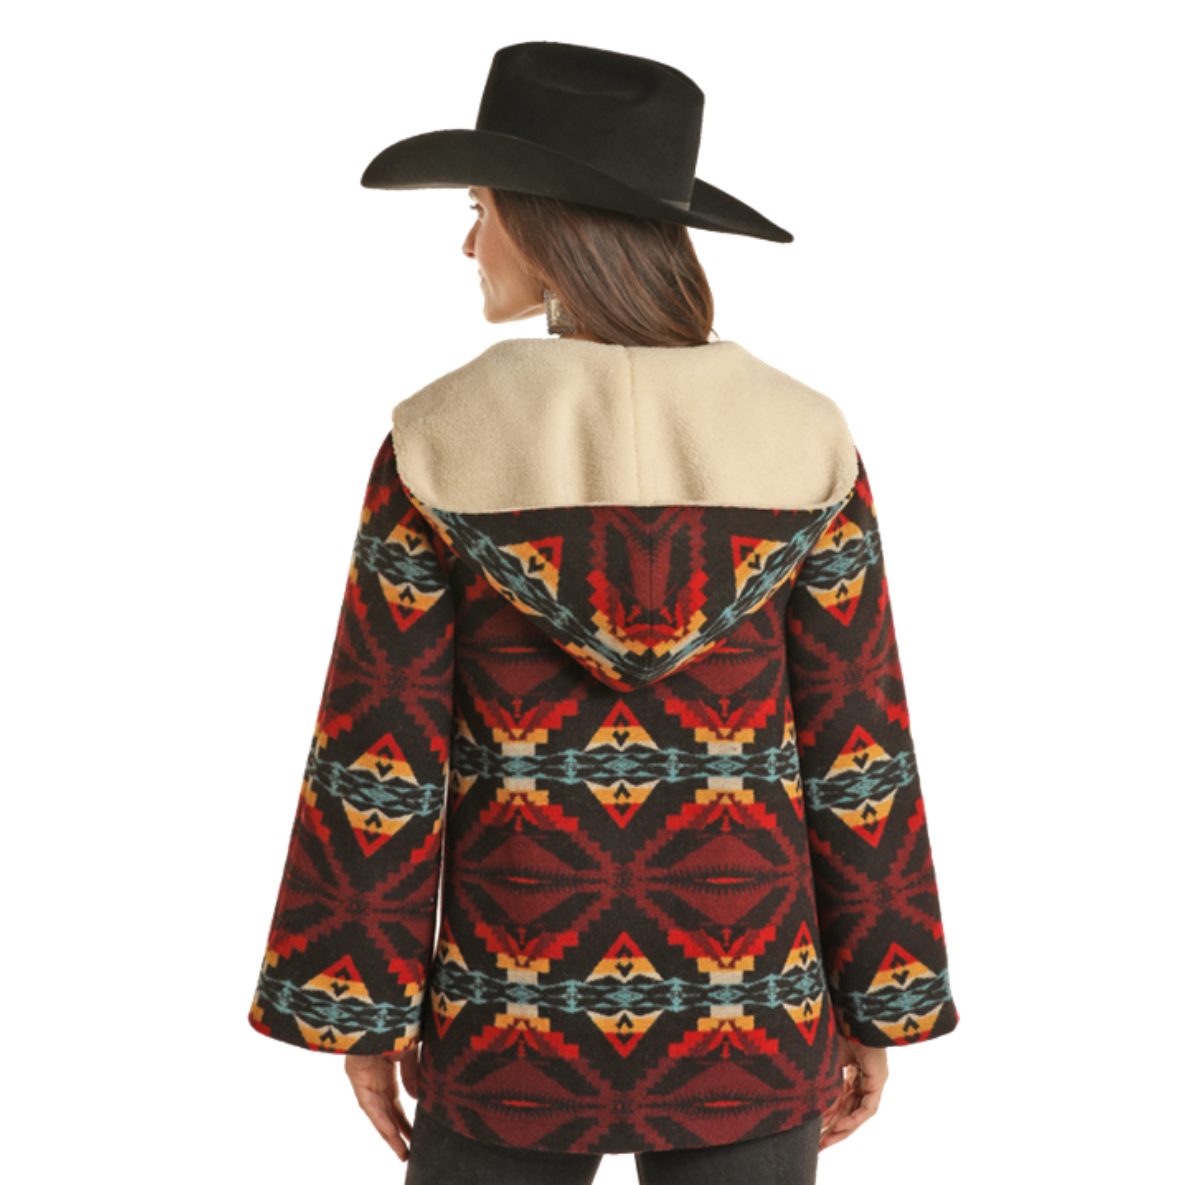 Powder River Ladies Black Aztec Jacquard Wool Cape Coat DW92C01502-01